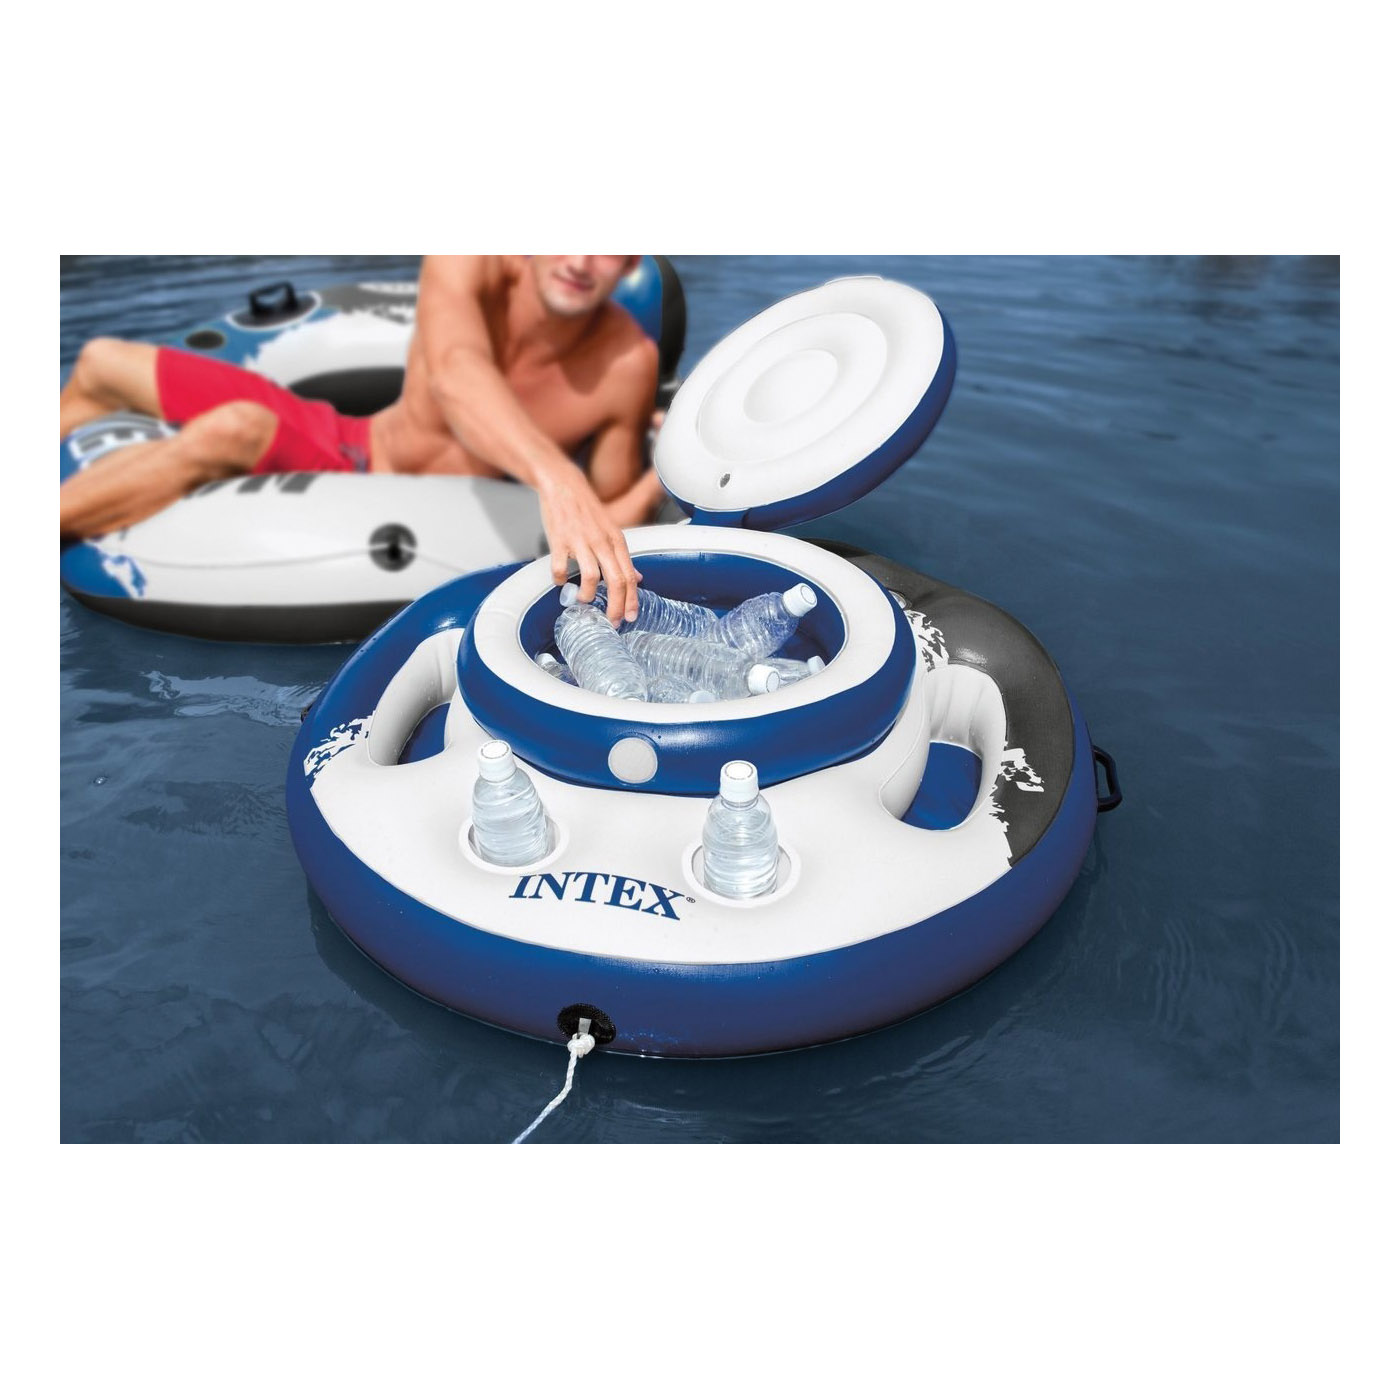 INTEX 56822EP Mega Chill Pool Float, Vinyl, Blue/White - 2